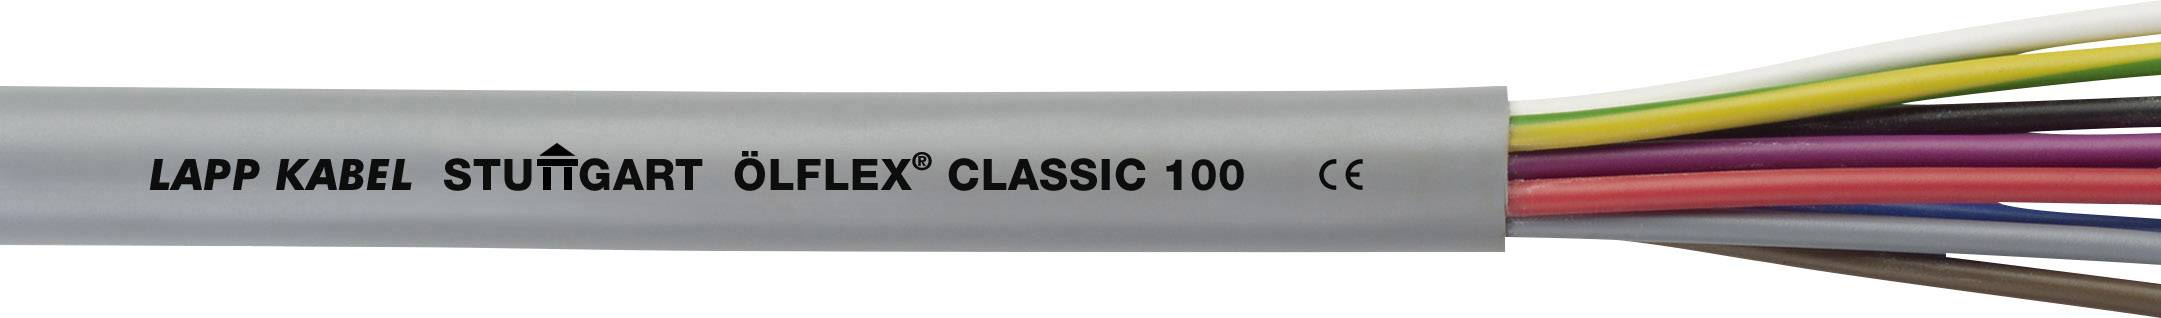 LAPP KABEL Steuerleitung ÖLFLEX® CLASSIC 100 4 G 4 mm² Grau LappKabel 1120807/100 100 m